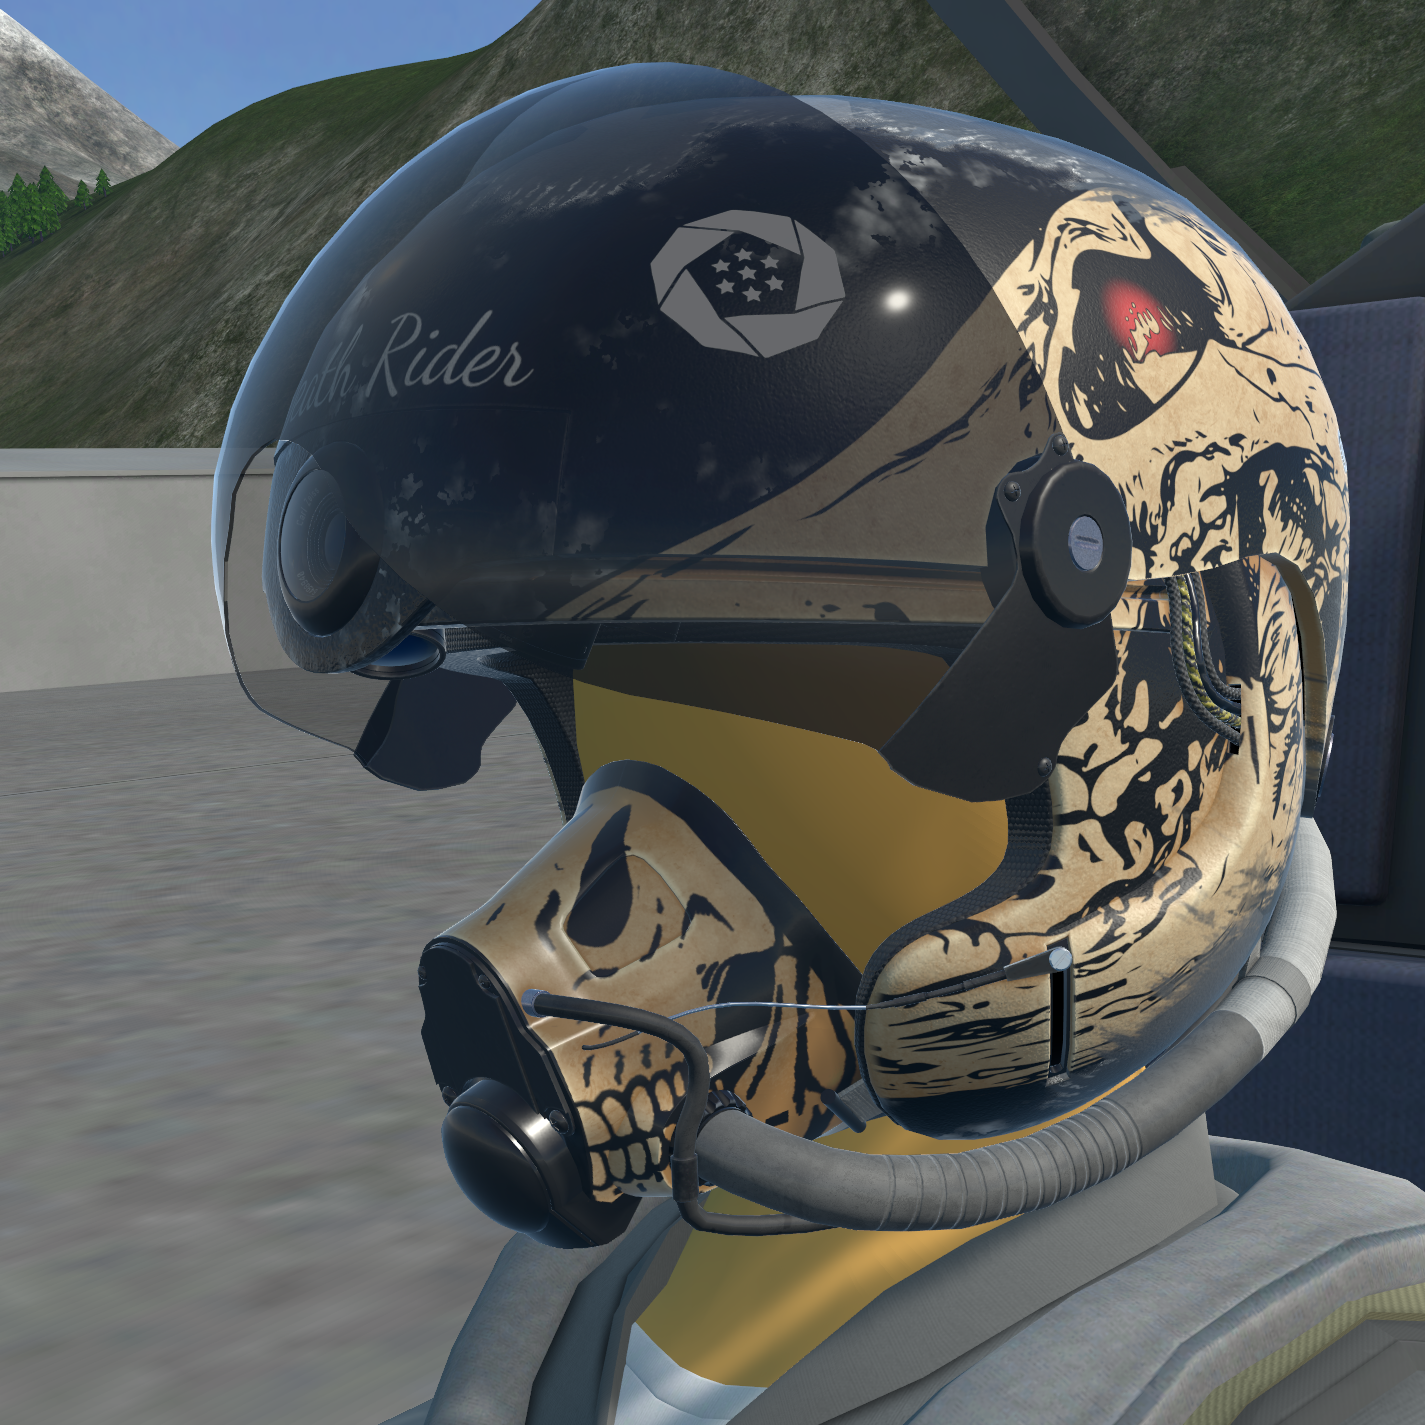 Death Rider X02S Helmet Preview Image